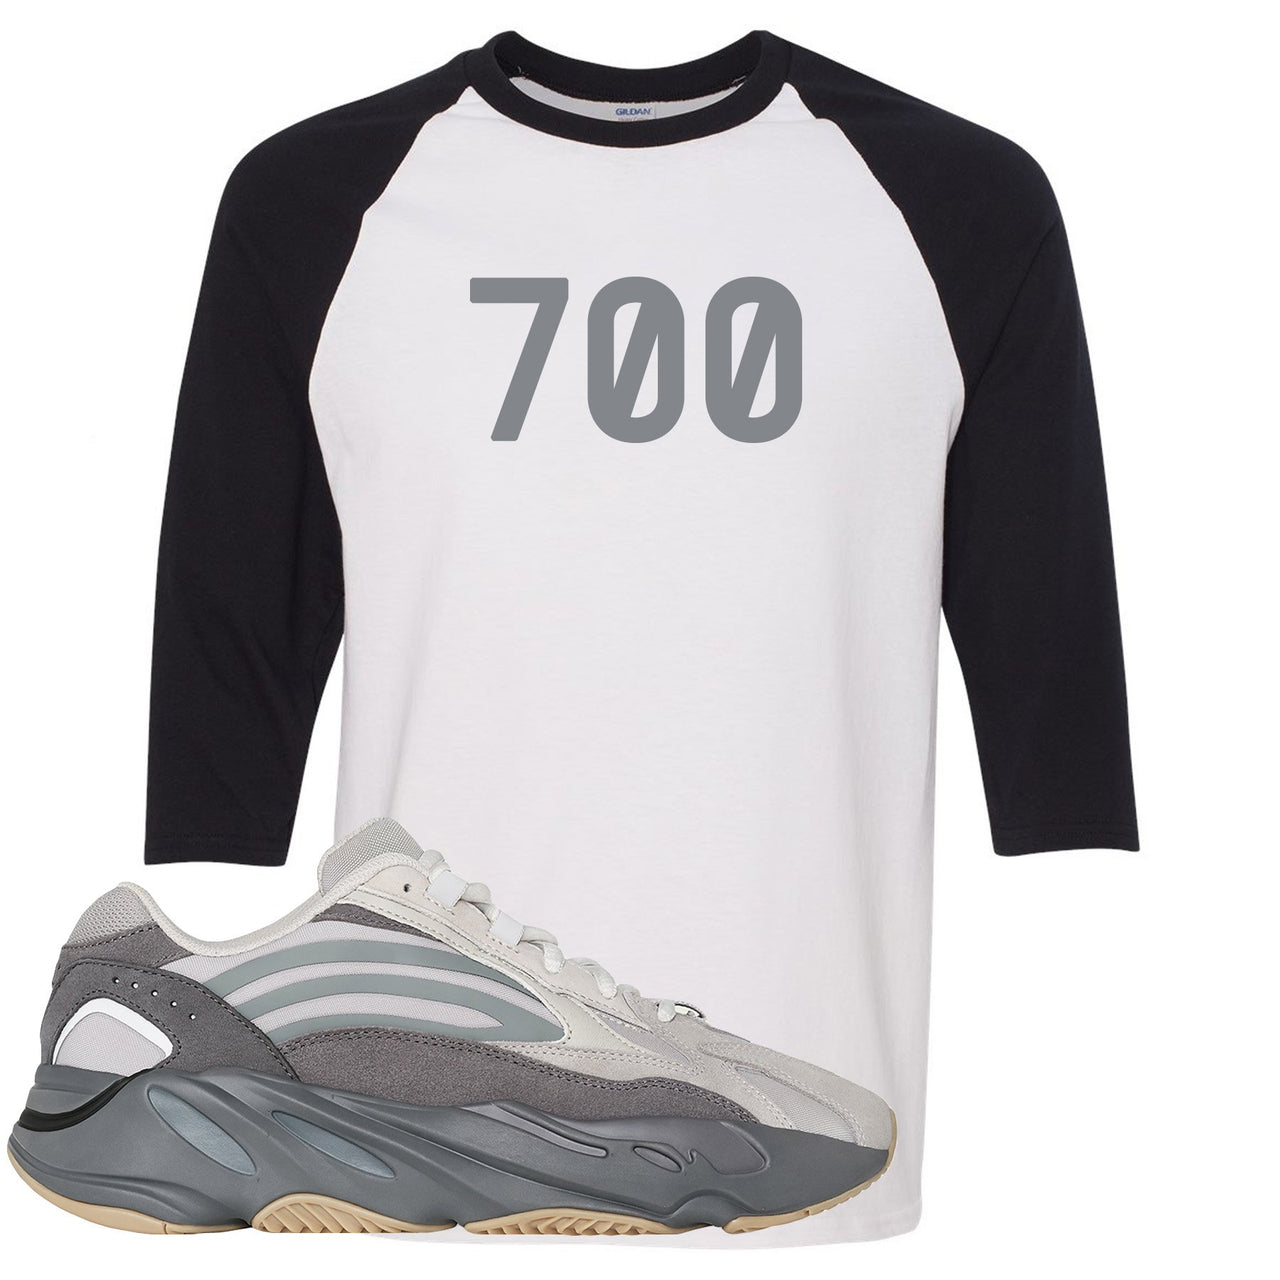 Tephra v2 700s Raglan T Shirt | 700, White and Black